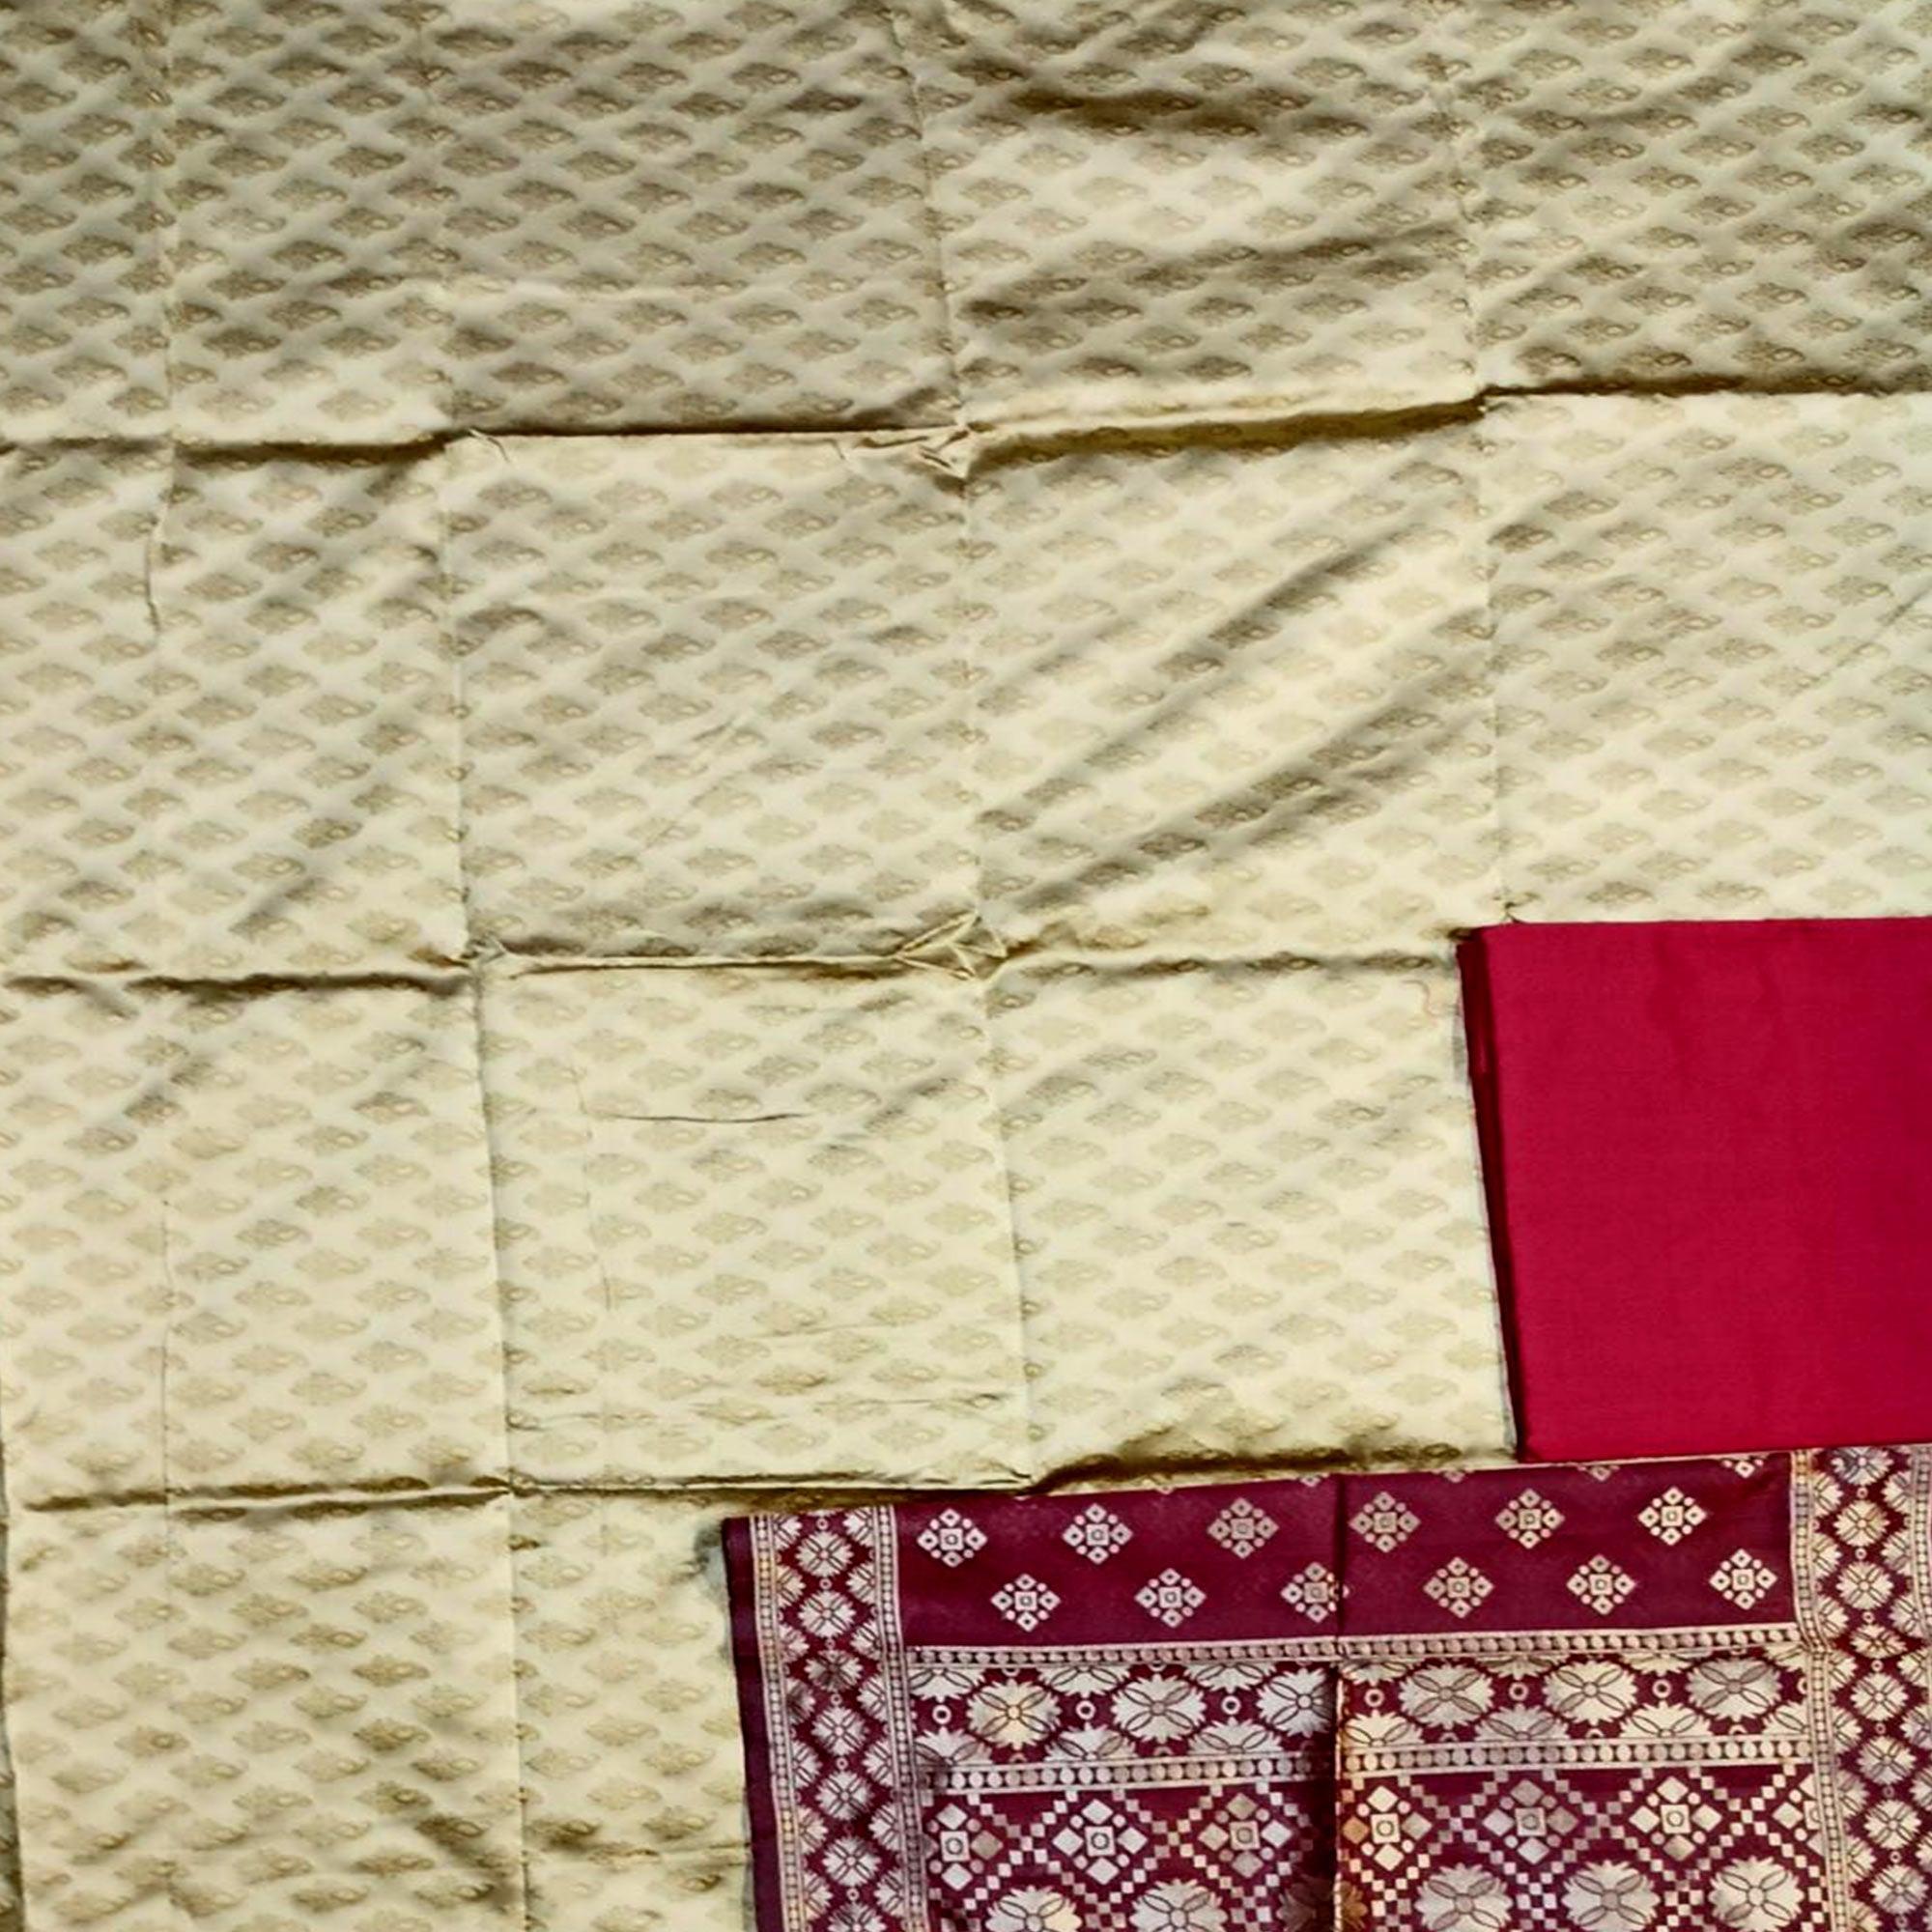 Chiku Festive Wear Woven Banarasi Silk Dress Material - Peachmode